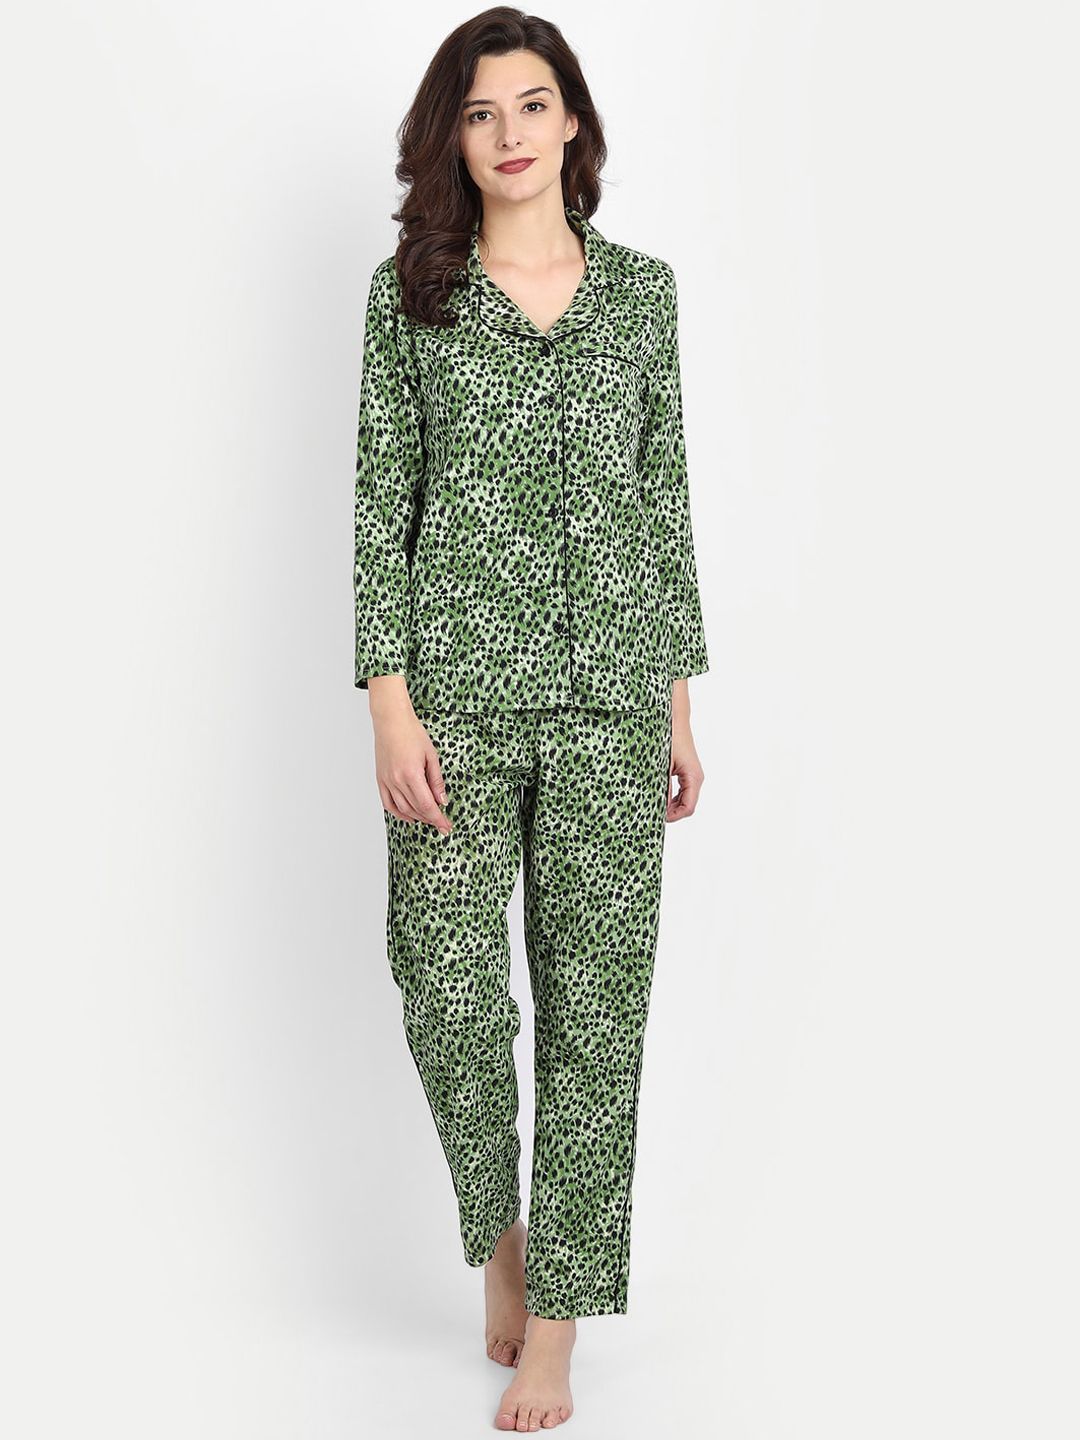 IX IMPRESSION Women Green & Black Printed Night suit Price in India